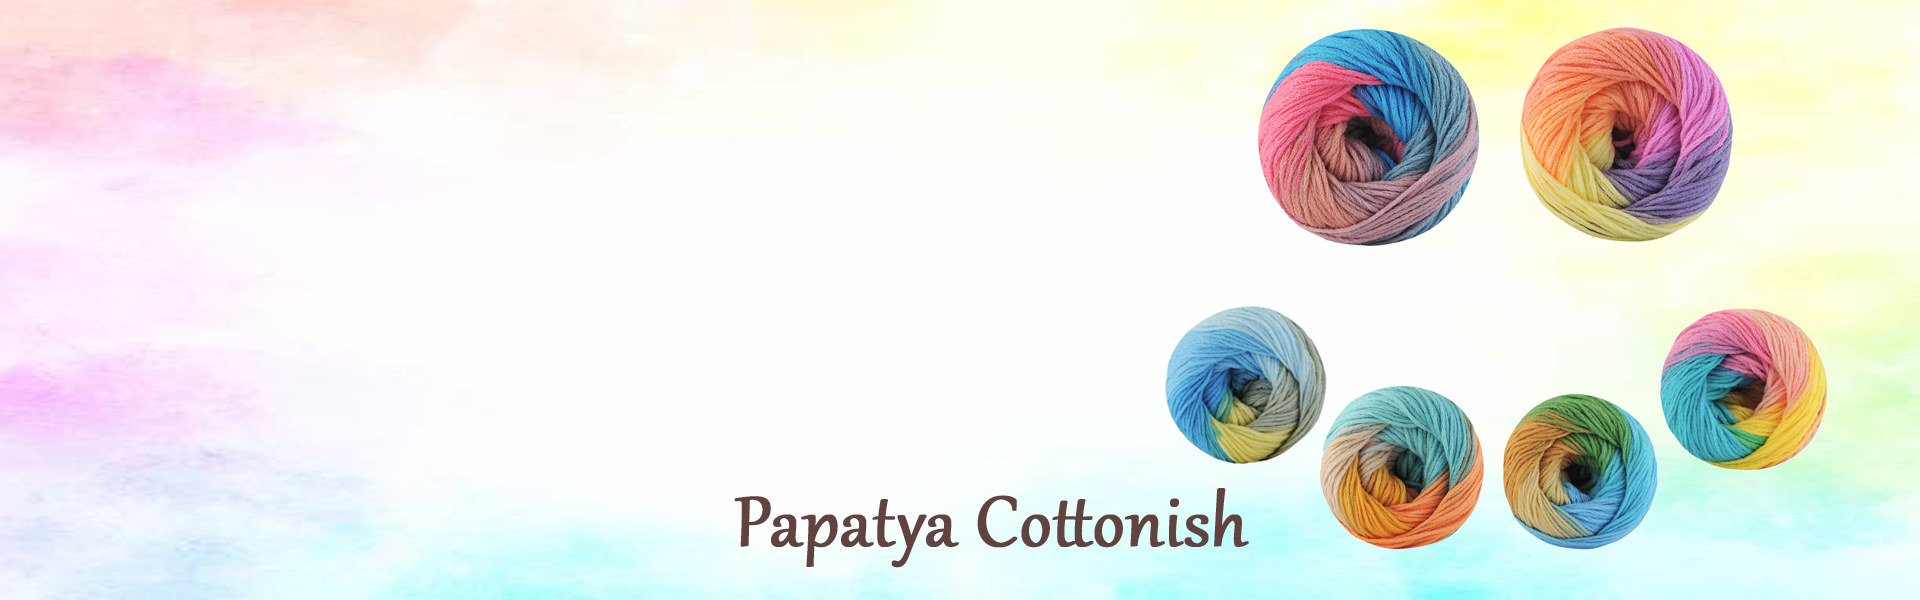 Papatya Cottonish 